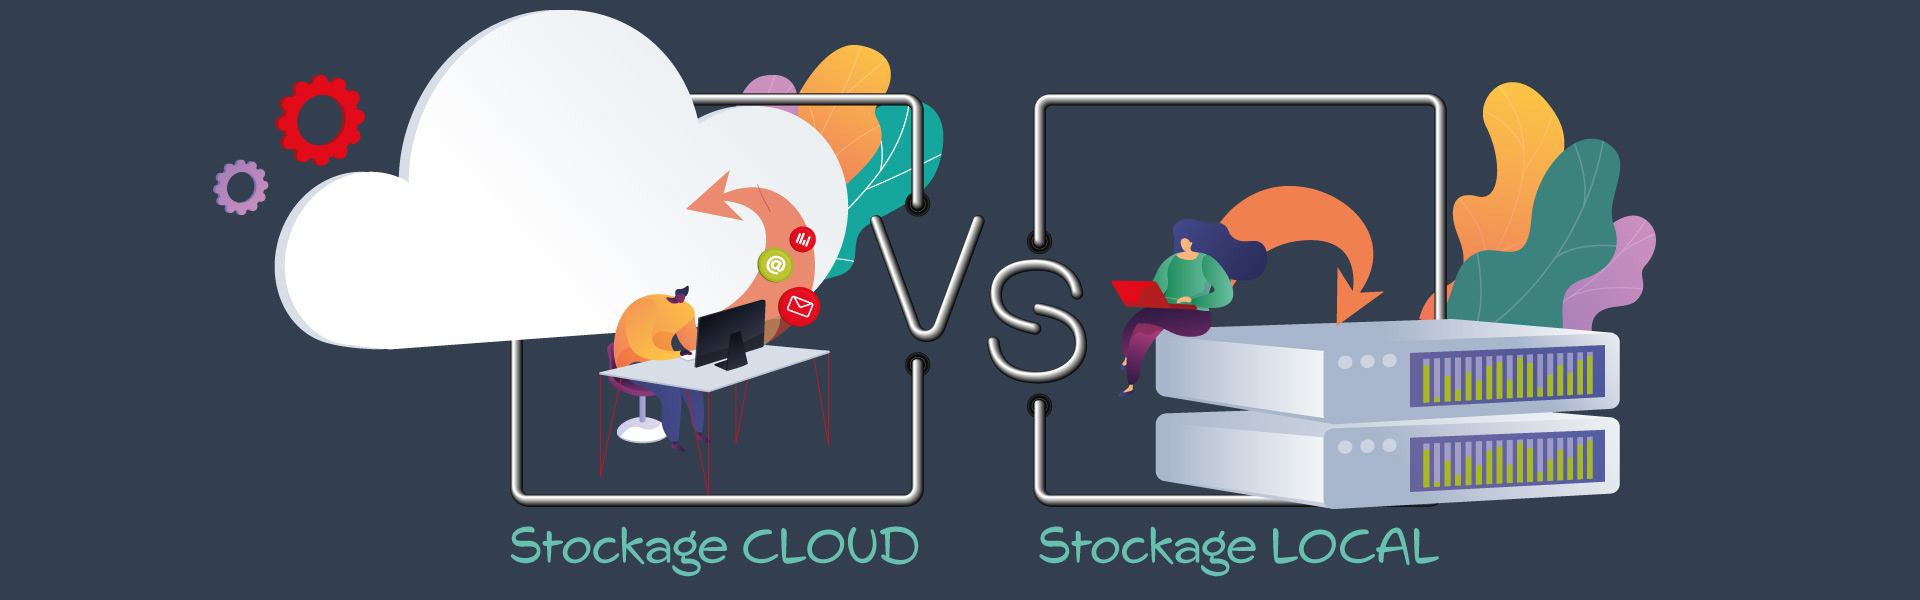 stockage local vs stockage cloud